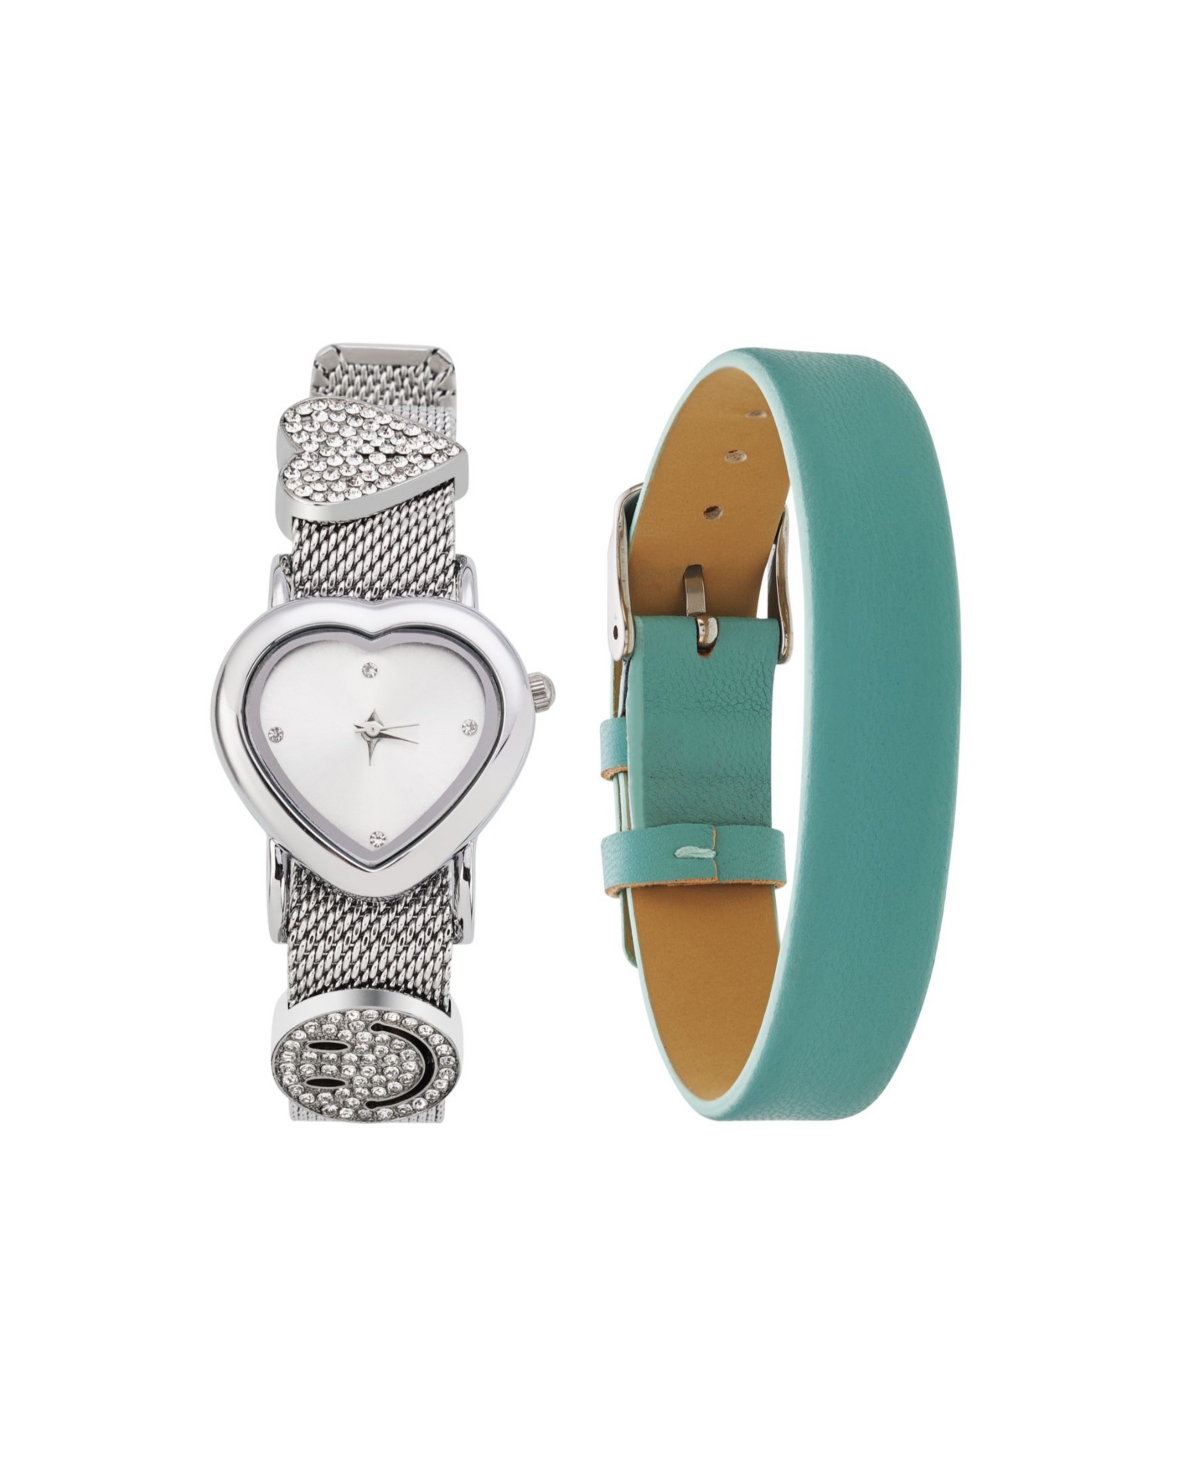 Jessica Carlyle Women's Silver Mesh Bracelet Watch 21mm Gift Set, 2 Piece